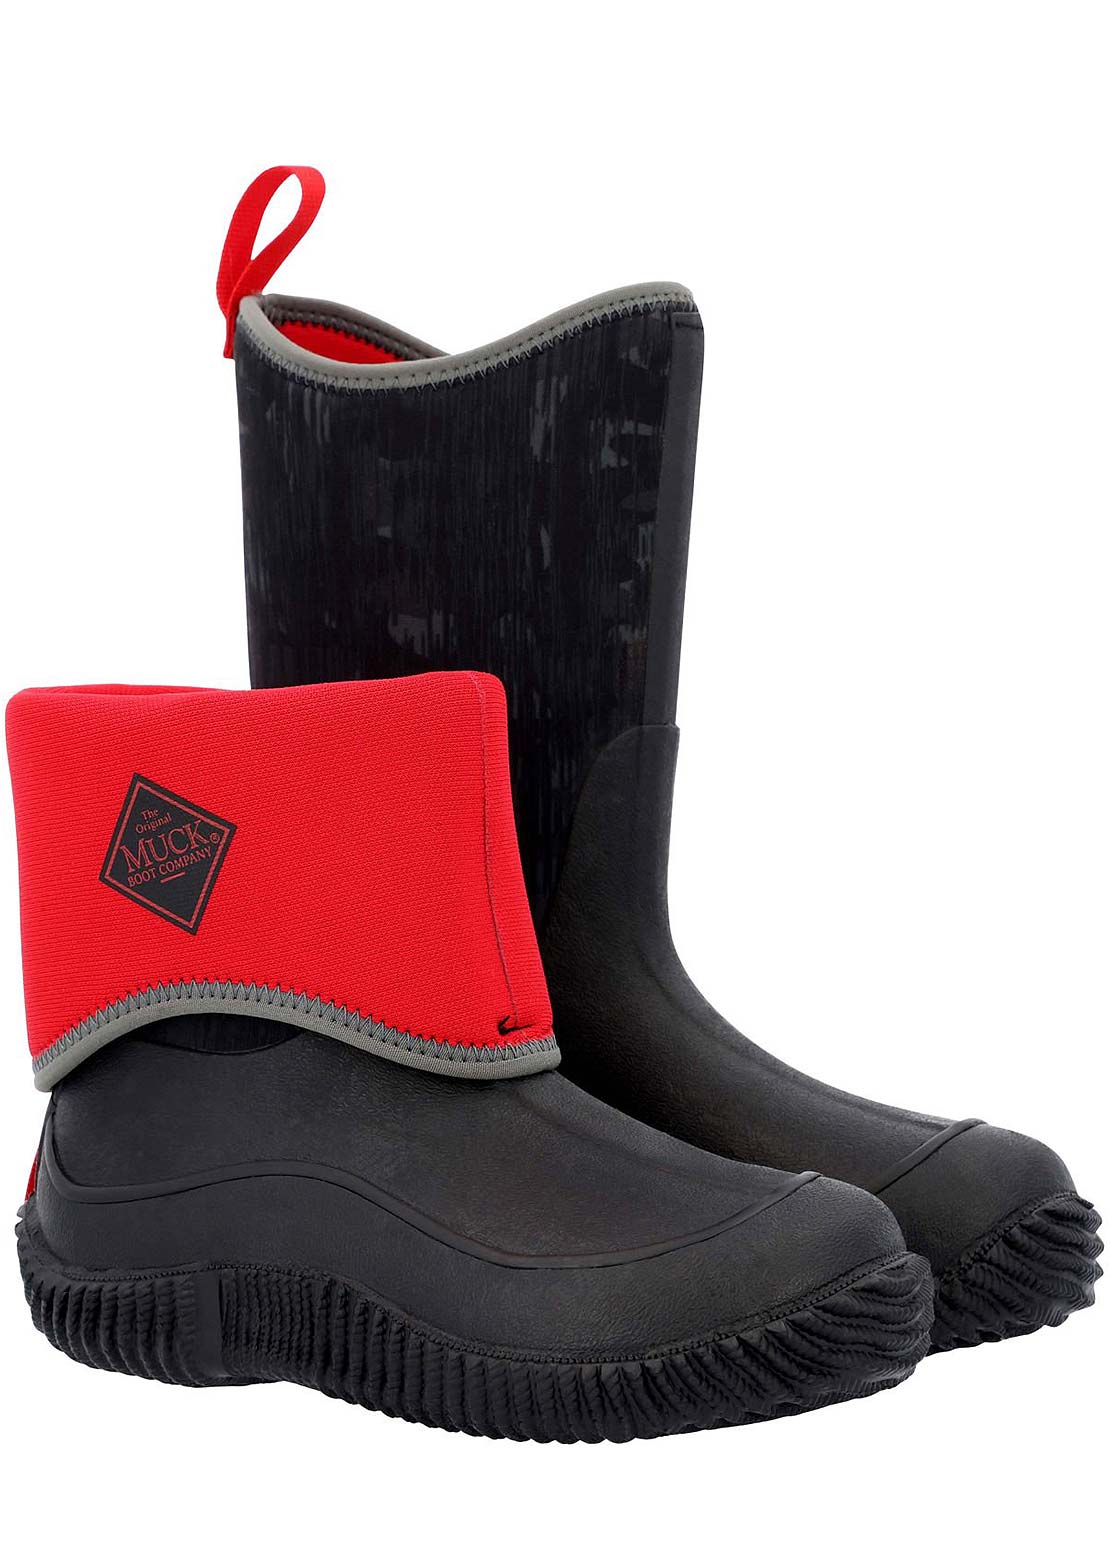 Muck Boot Co. Junior Hale Boots Black/Linear Camo